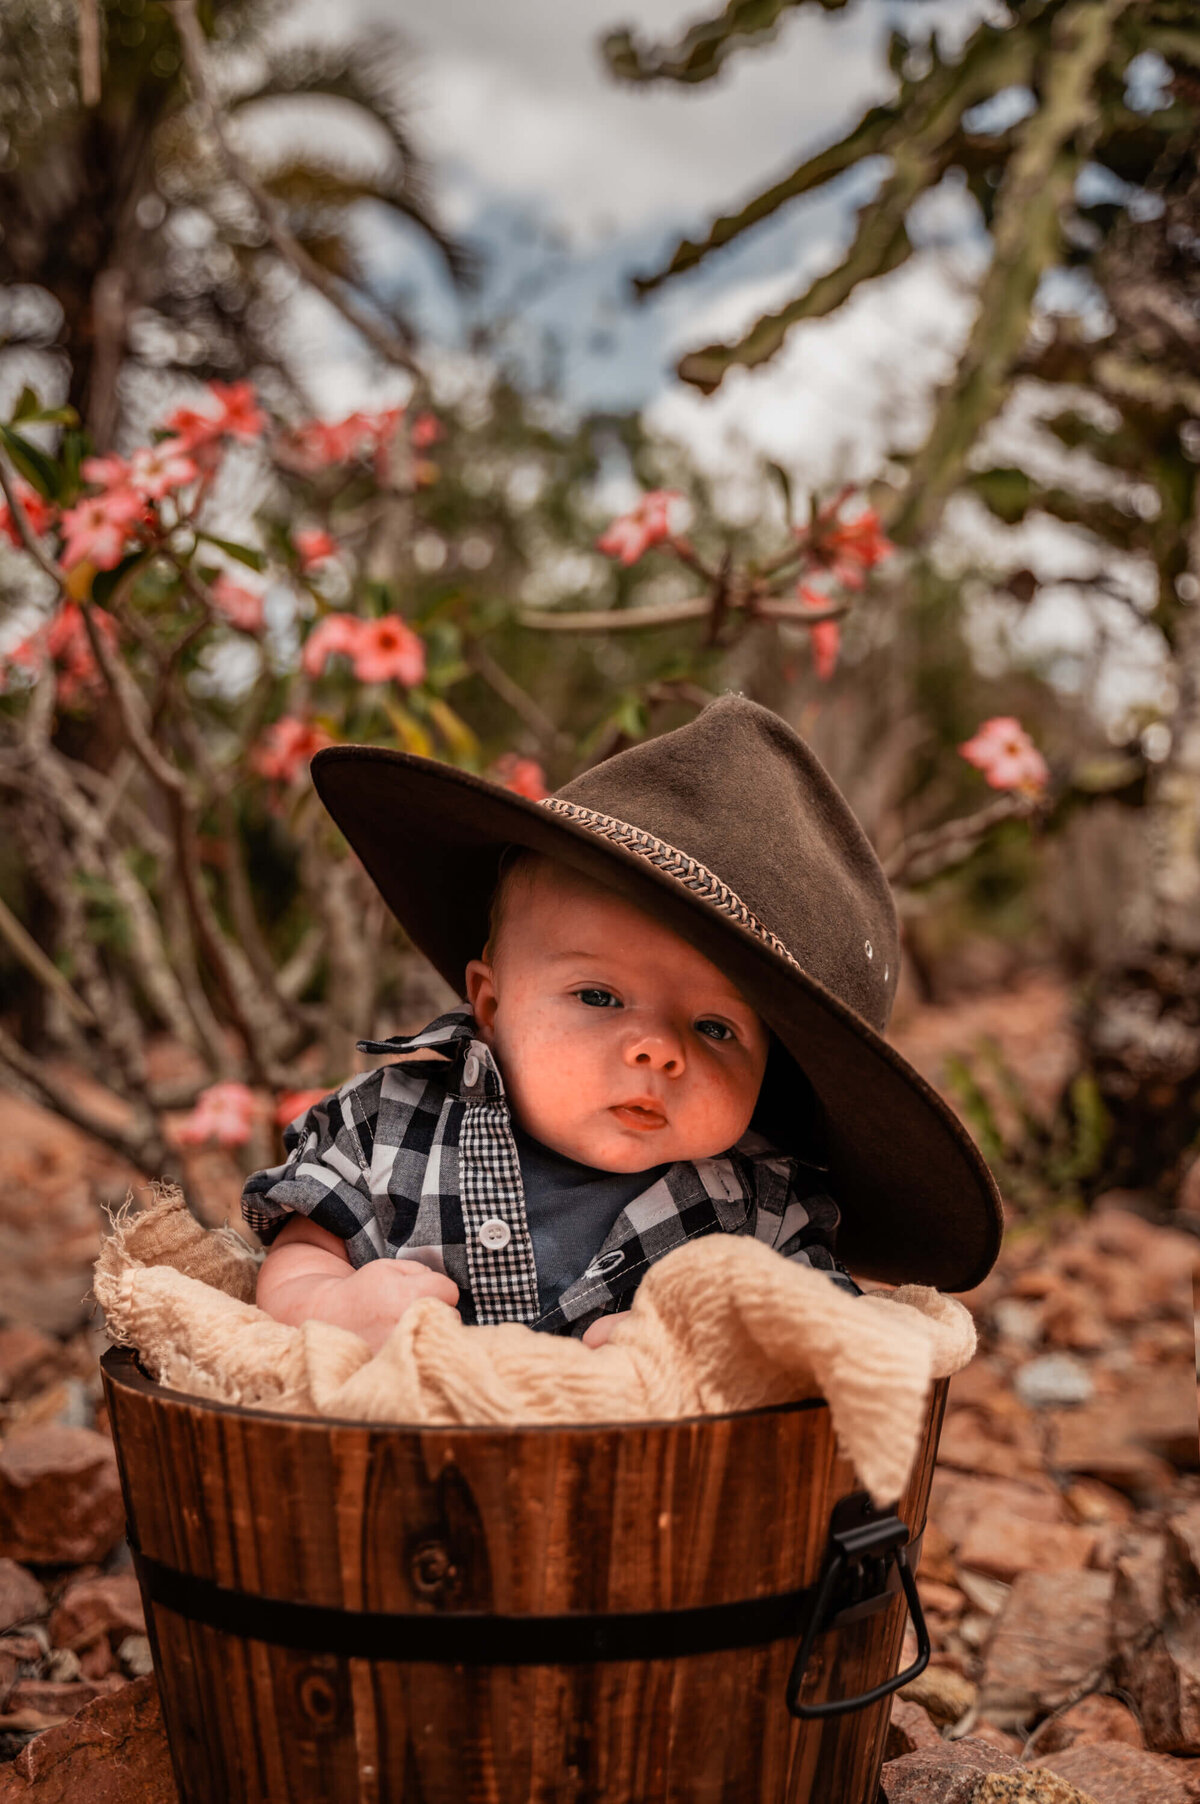 baby boy wearing cowboy hat sitting in wooden bucket in cactus garden - Townsville Child Milestone Photography by Jamie Simmons